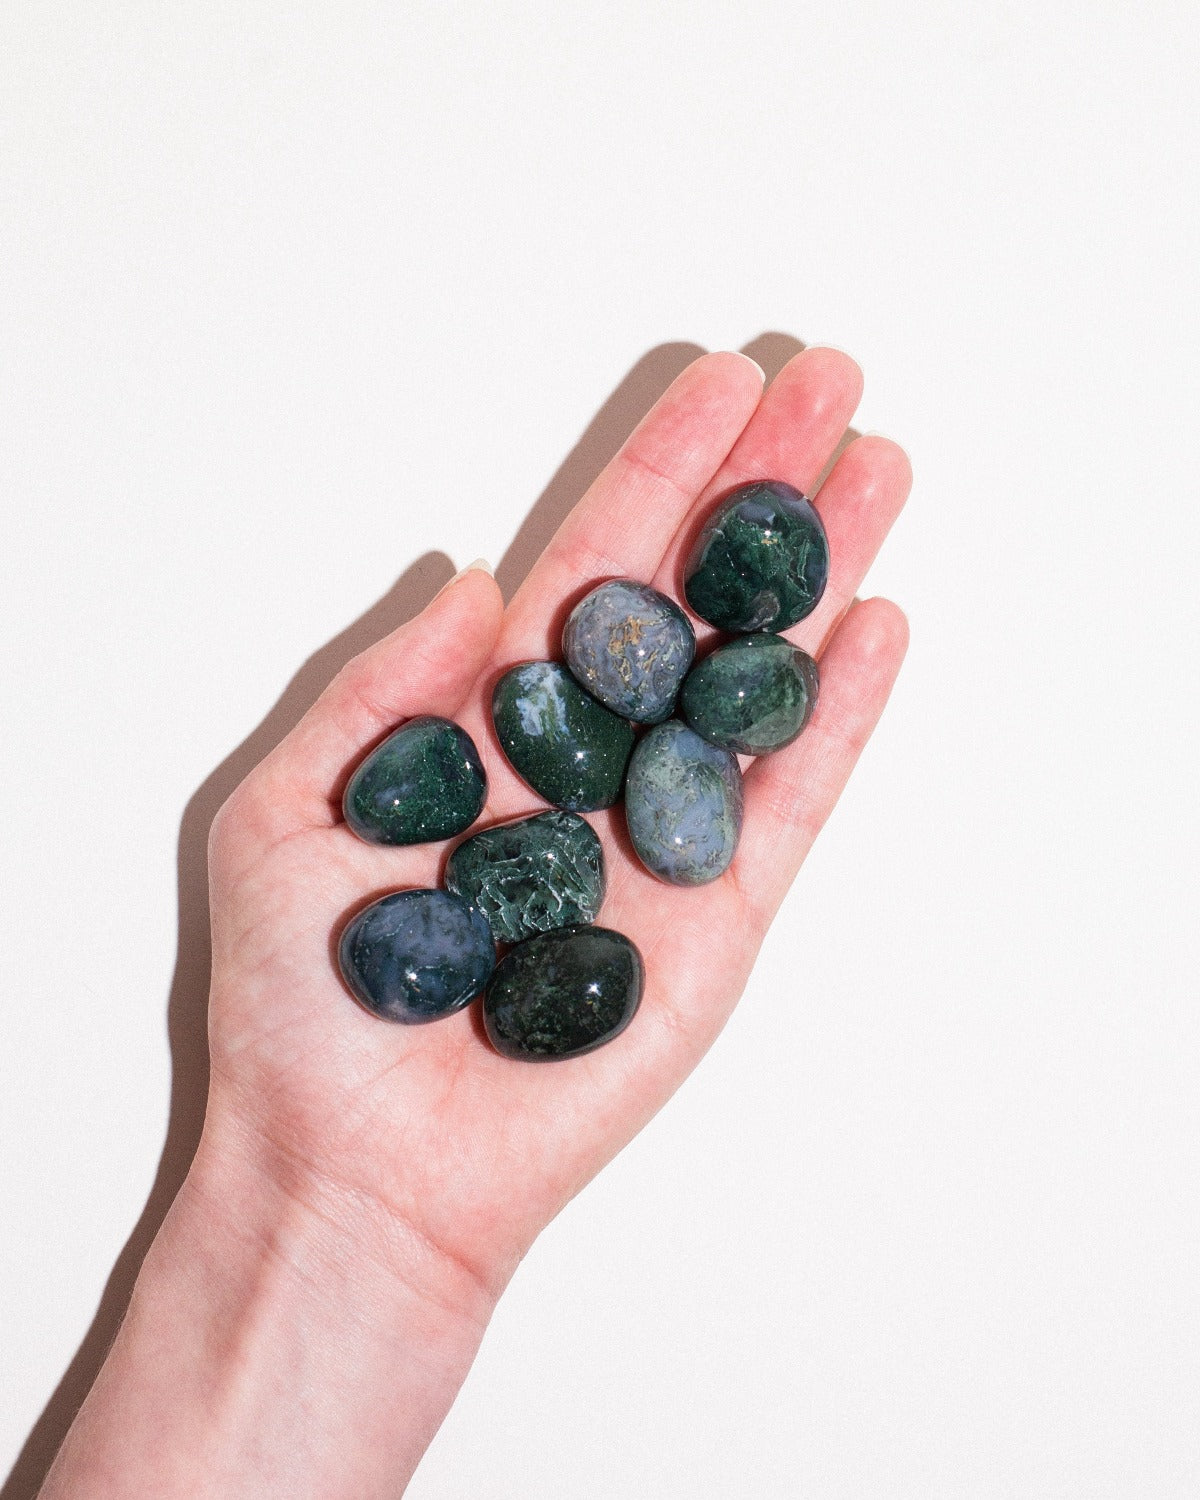 Moss Agate Tumbled Healing Crystal – Abundance/New Beginnings